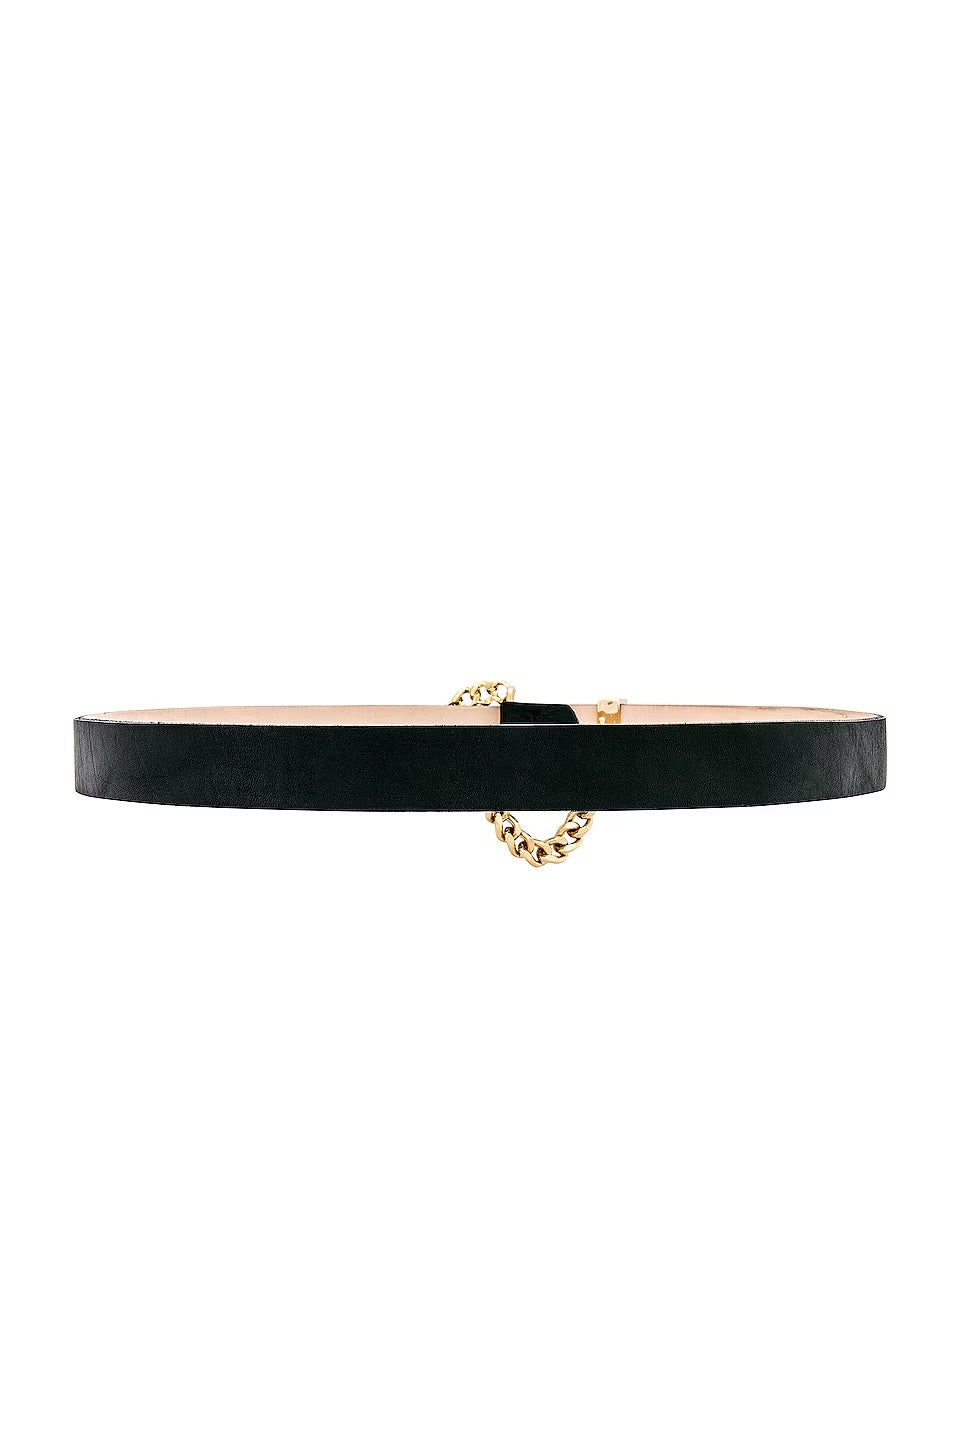 Gold Chain - Black Leather Belt